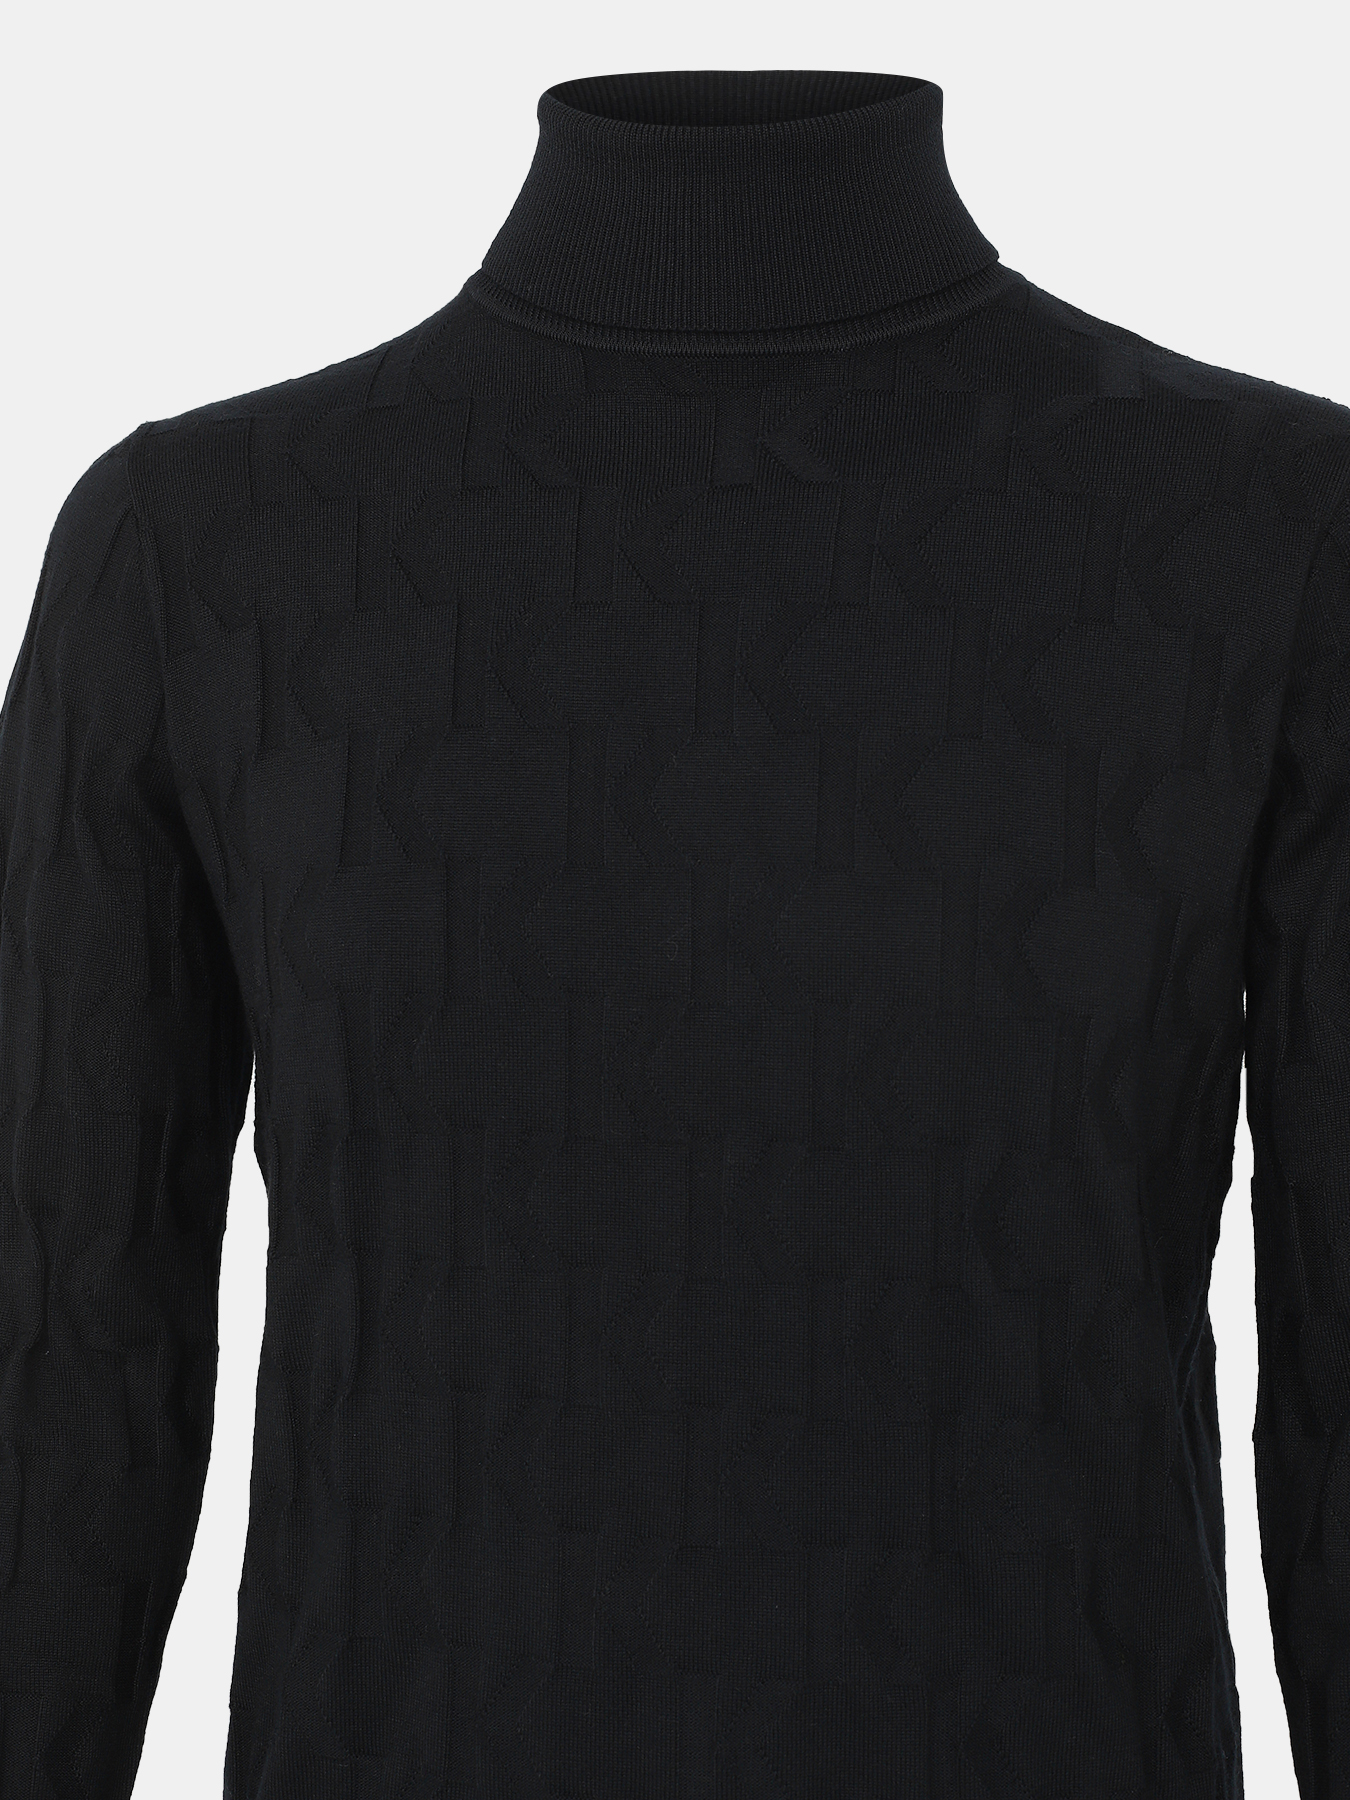 Свитер Karl Lagerfeld 388208-287, цвет черный, размер 56-58 - фото 3